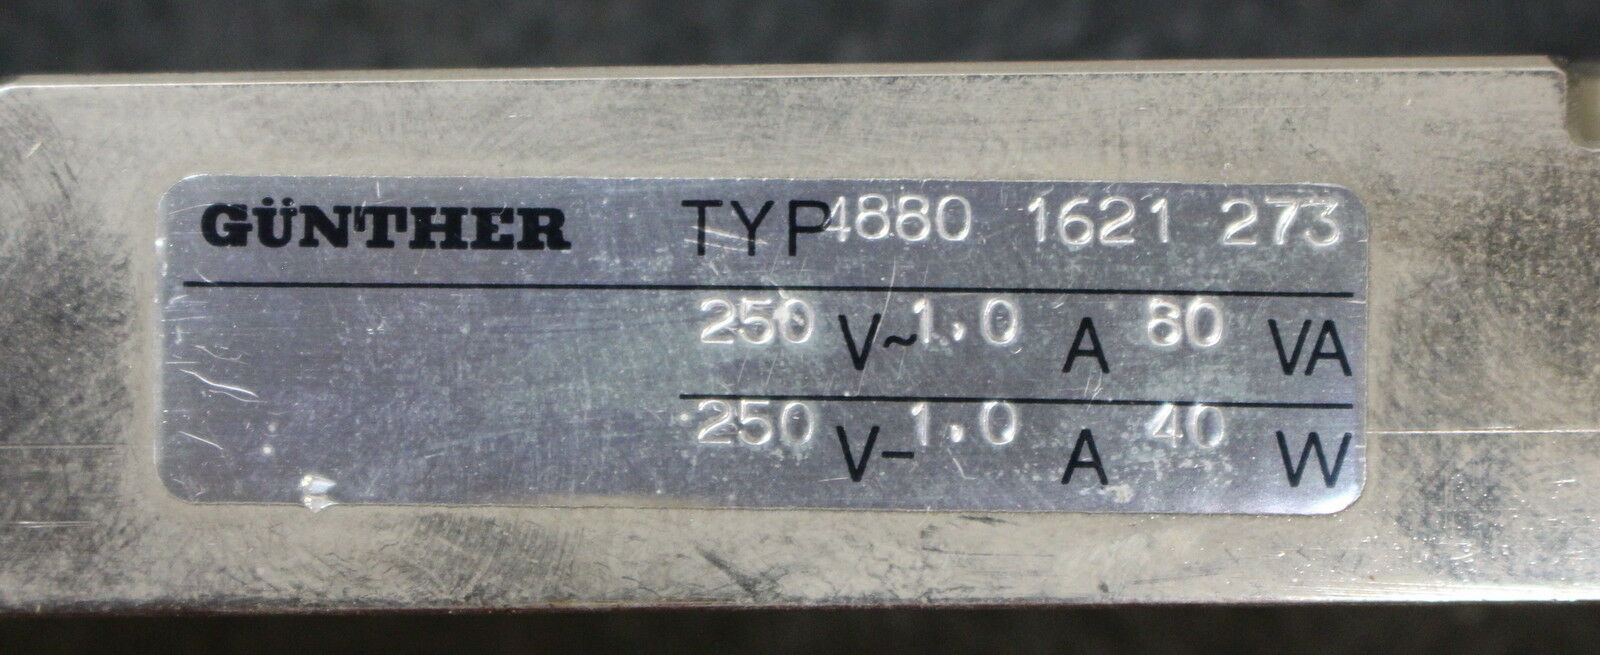 GÜNTHER Positionsgeber Typ 4880 1621 273 - 250VAC - 1A - 80VA - 40W